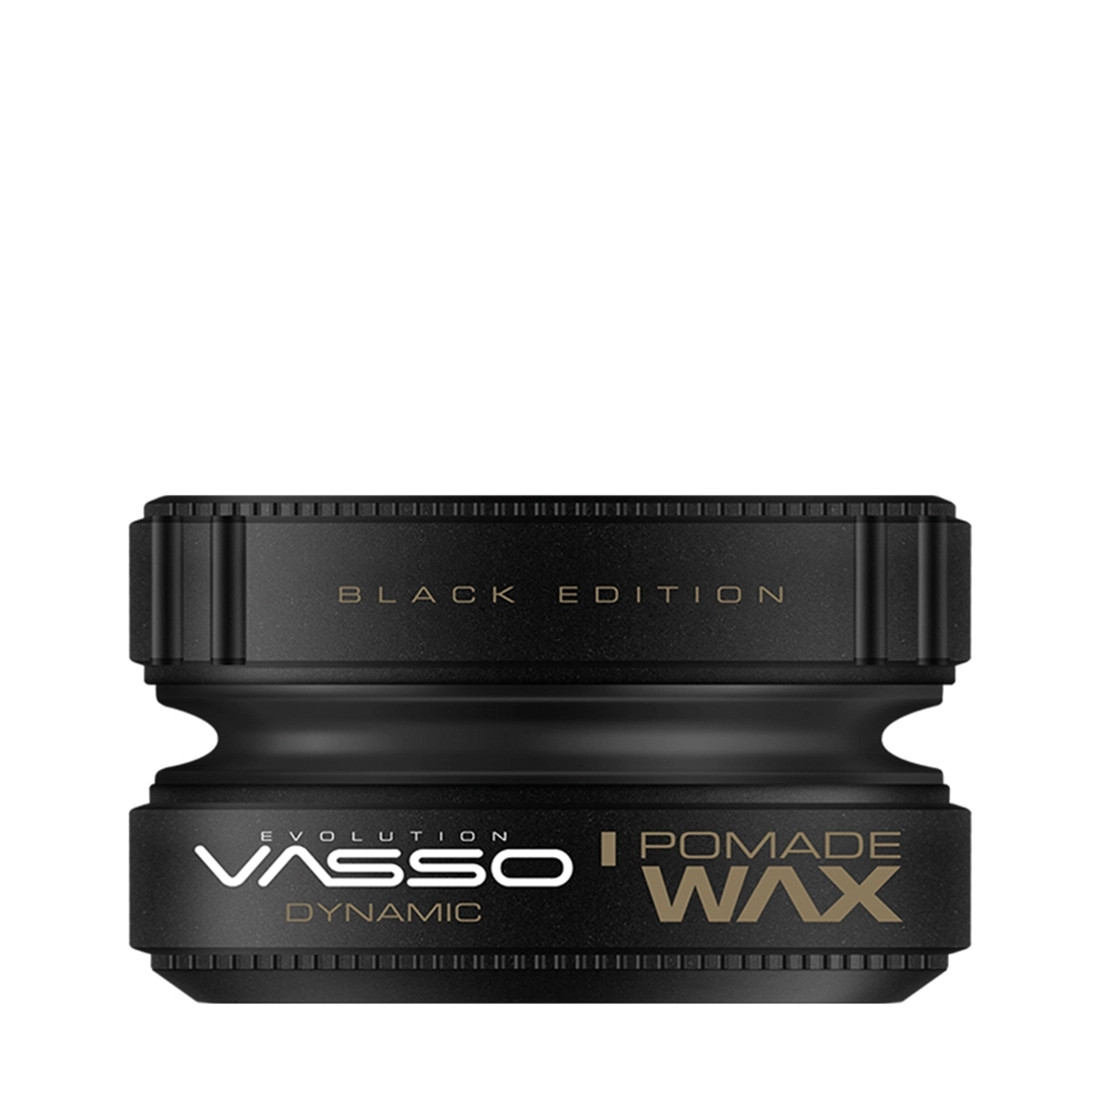 POMADE WAX BLACK EDITION – Воск-помада для укладки волос
DYNAMIC